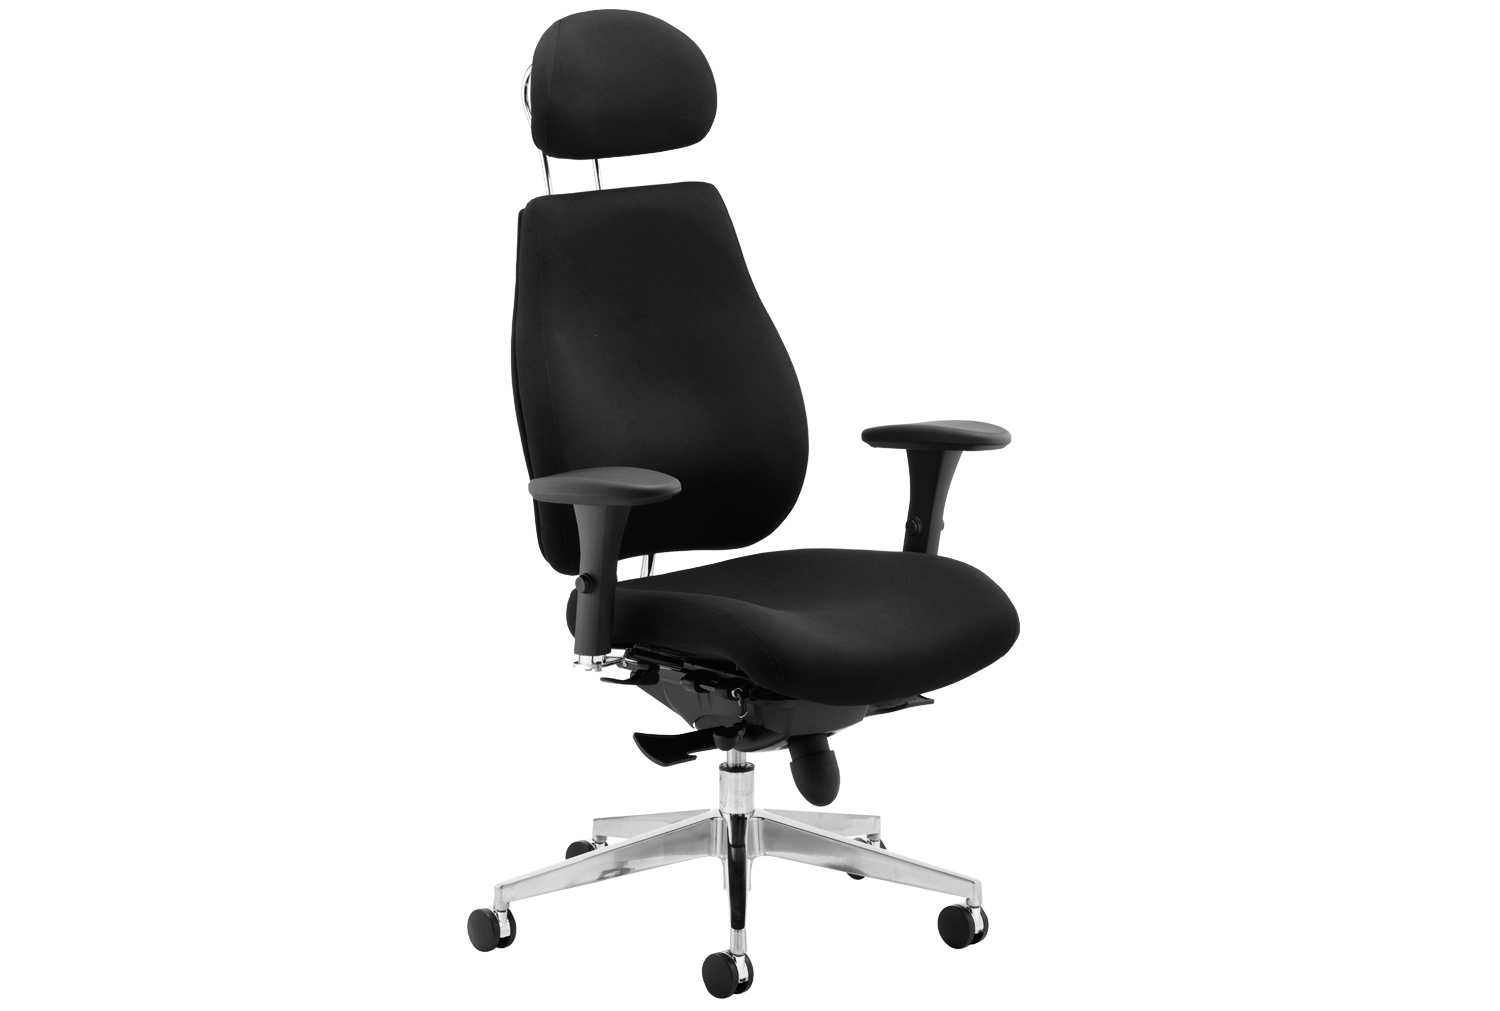 Praktikos Plus Posture Operator Office Chair With Headrest, Black